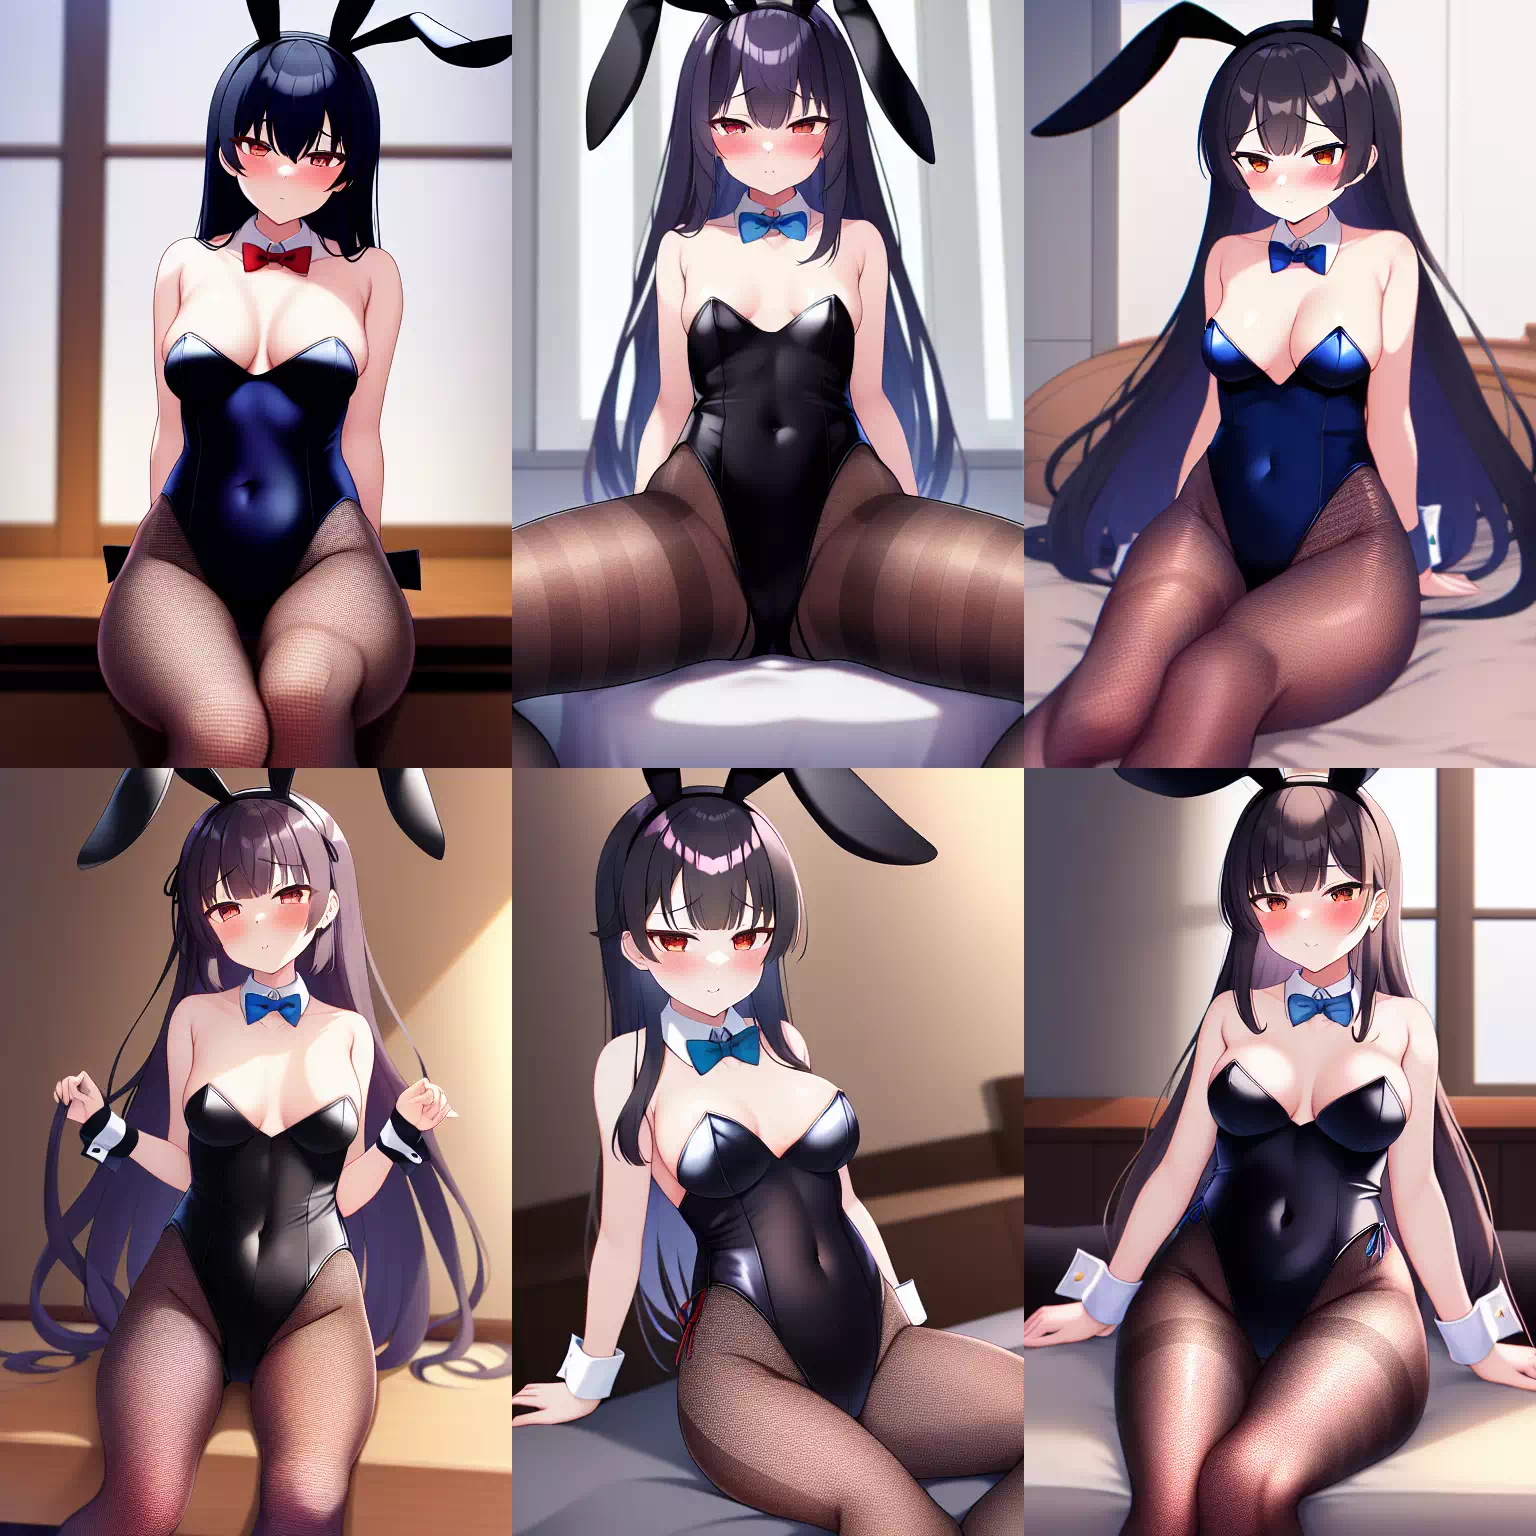 More bunny girls